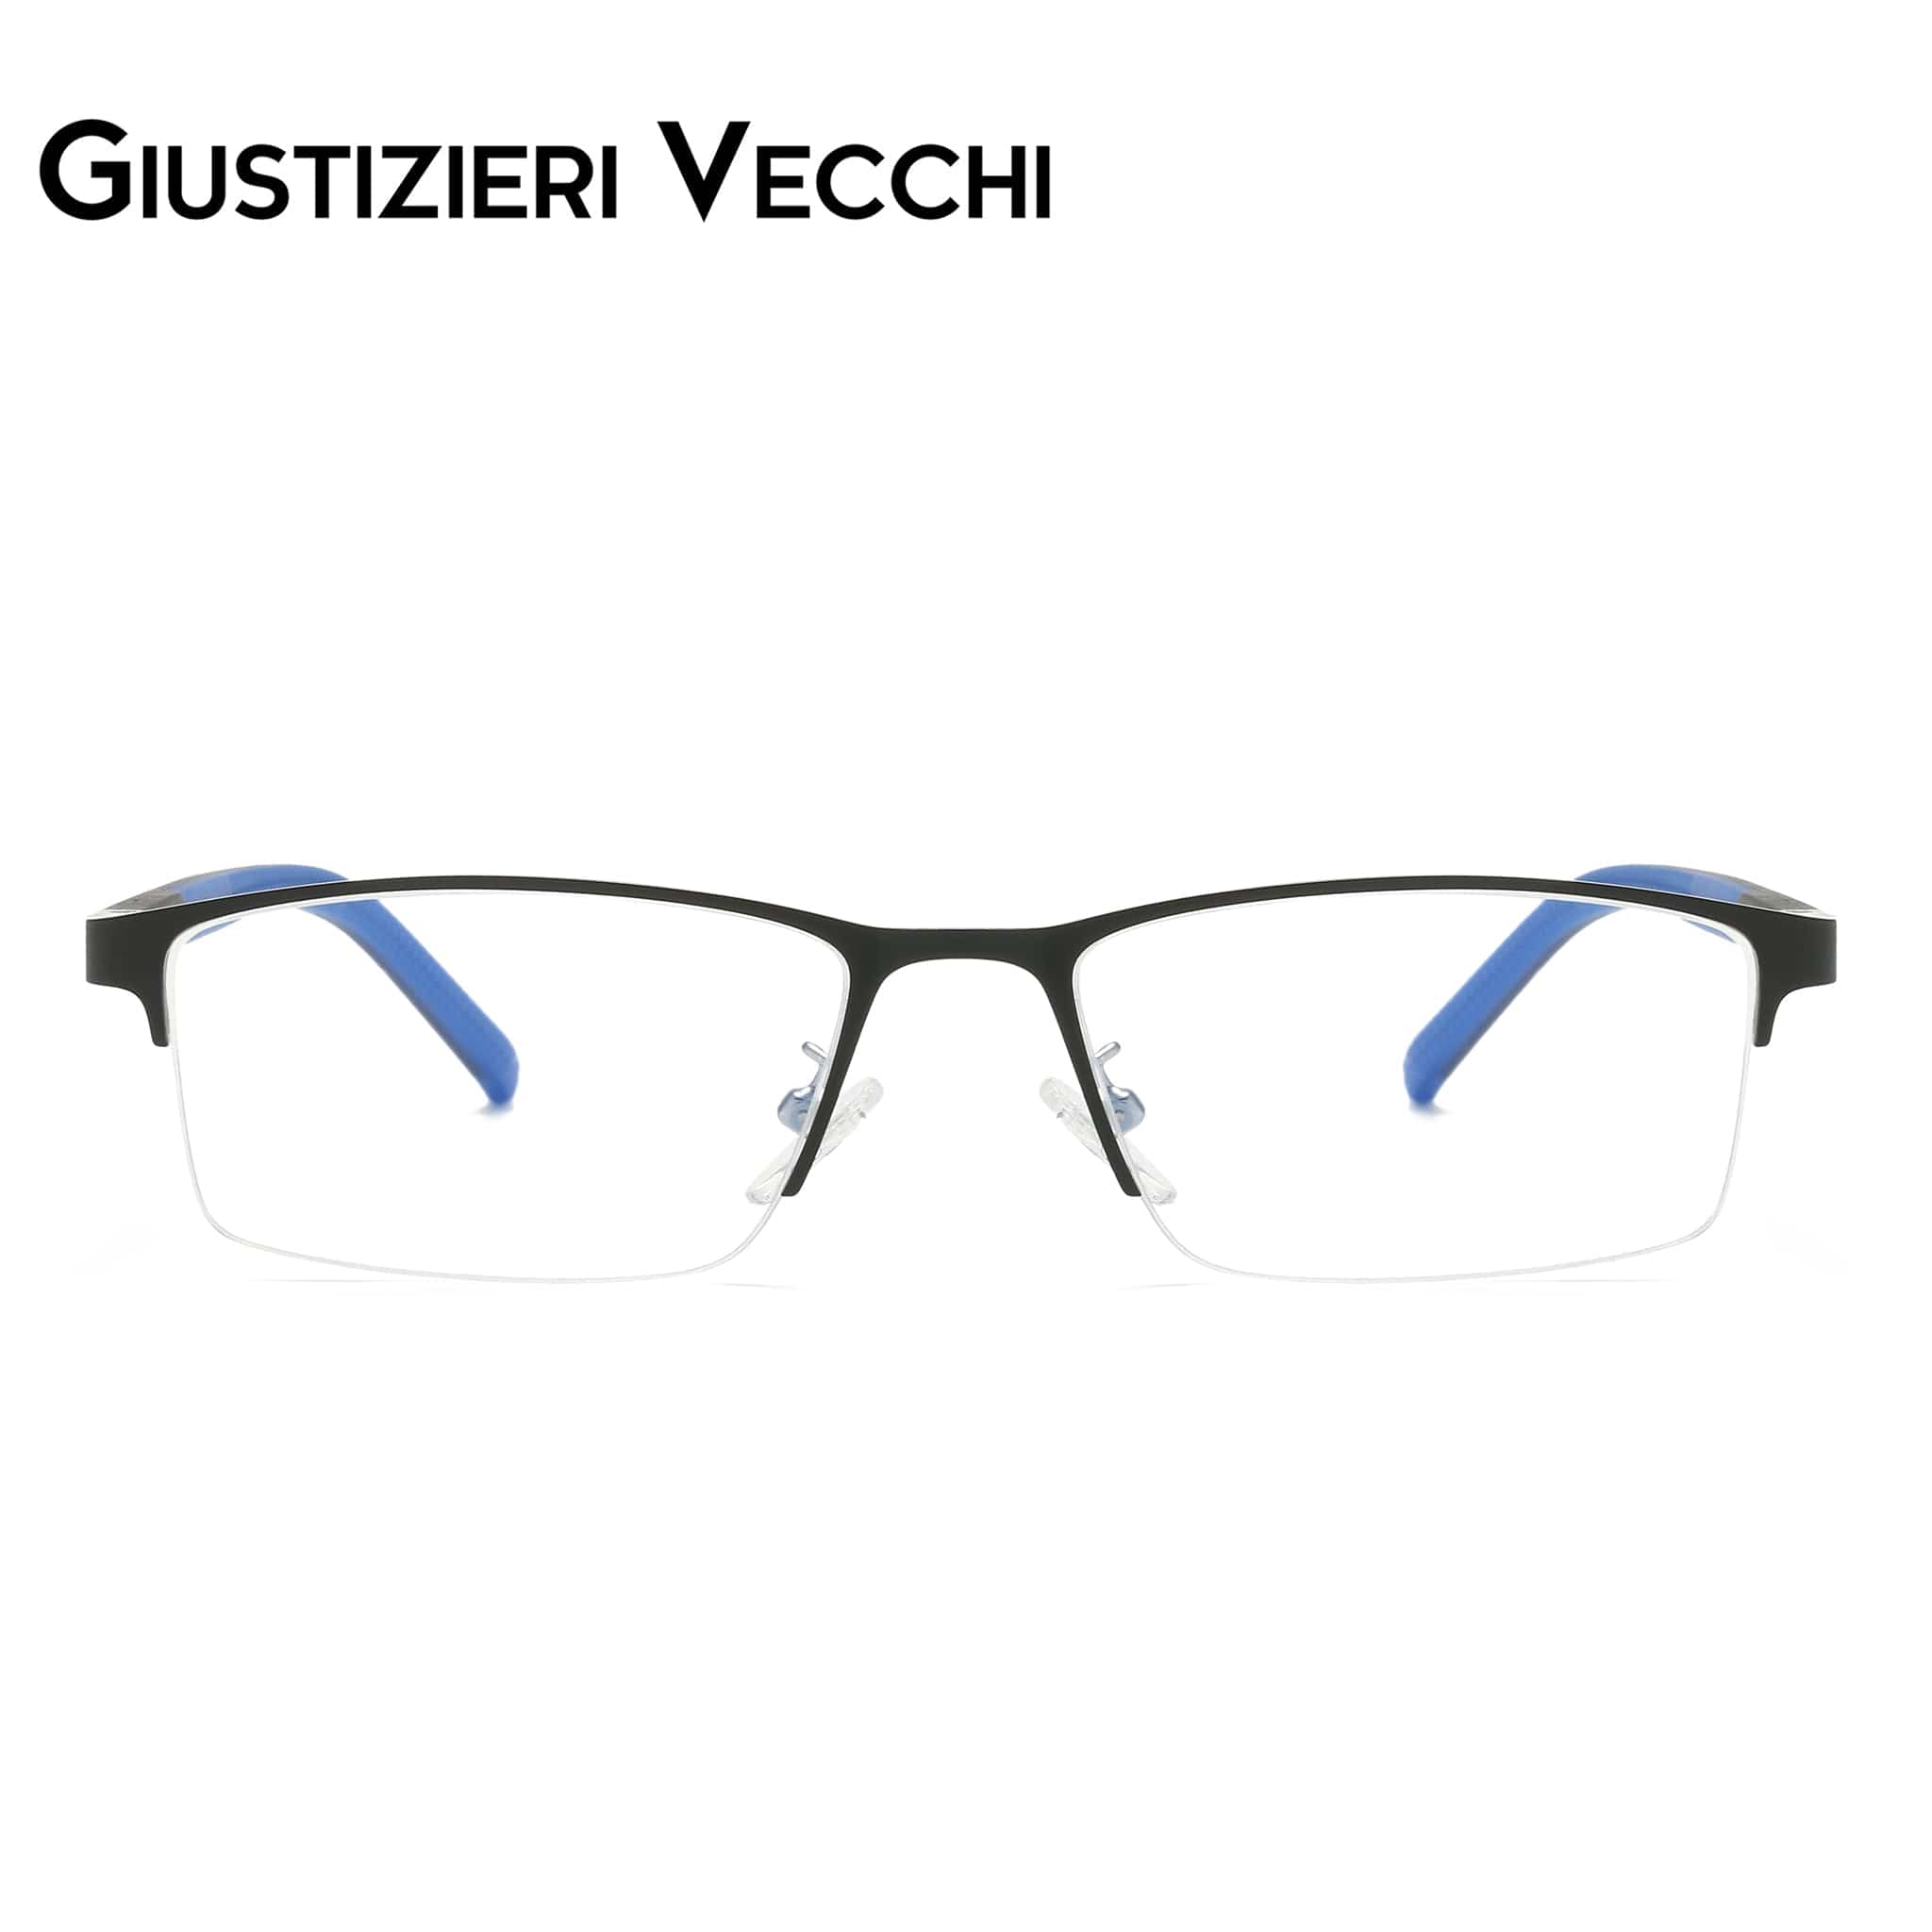 GIUSTIZIERI VECCHI Eyeglasses Large / Black with Blue HydroFlash Duo